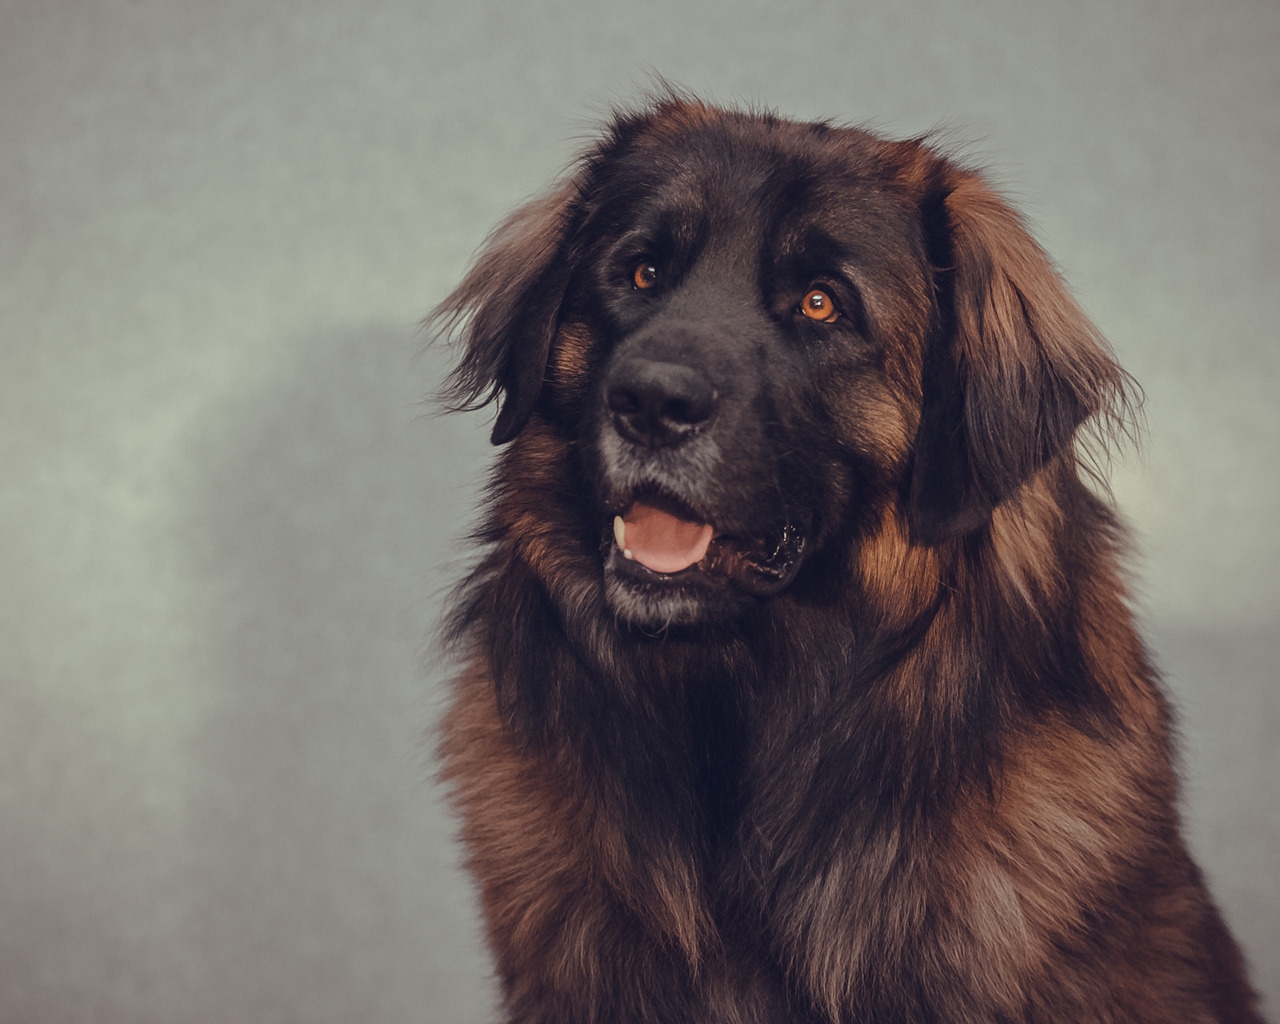 Big Brown Dog for 1280 x 1024 resolution